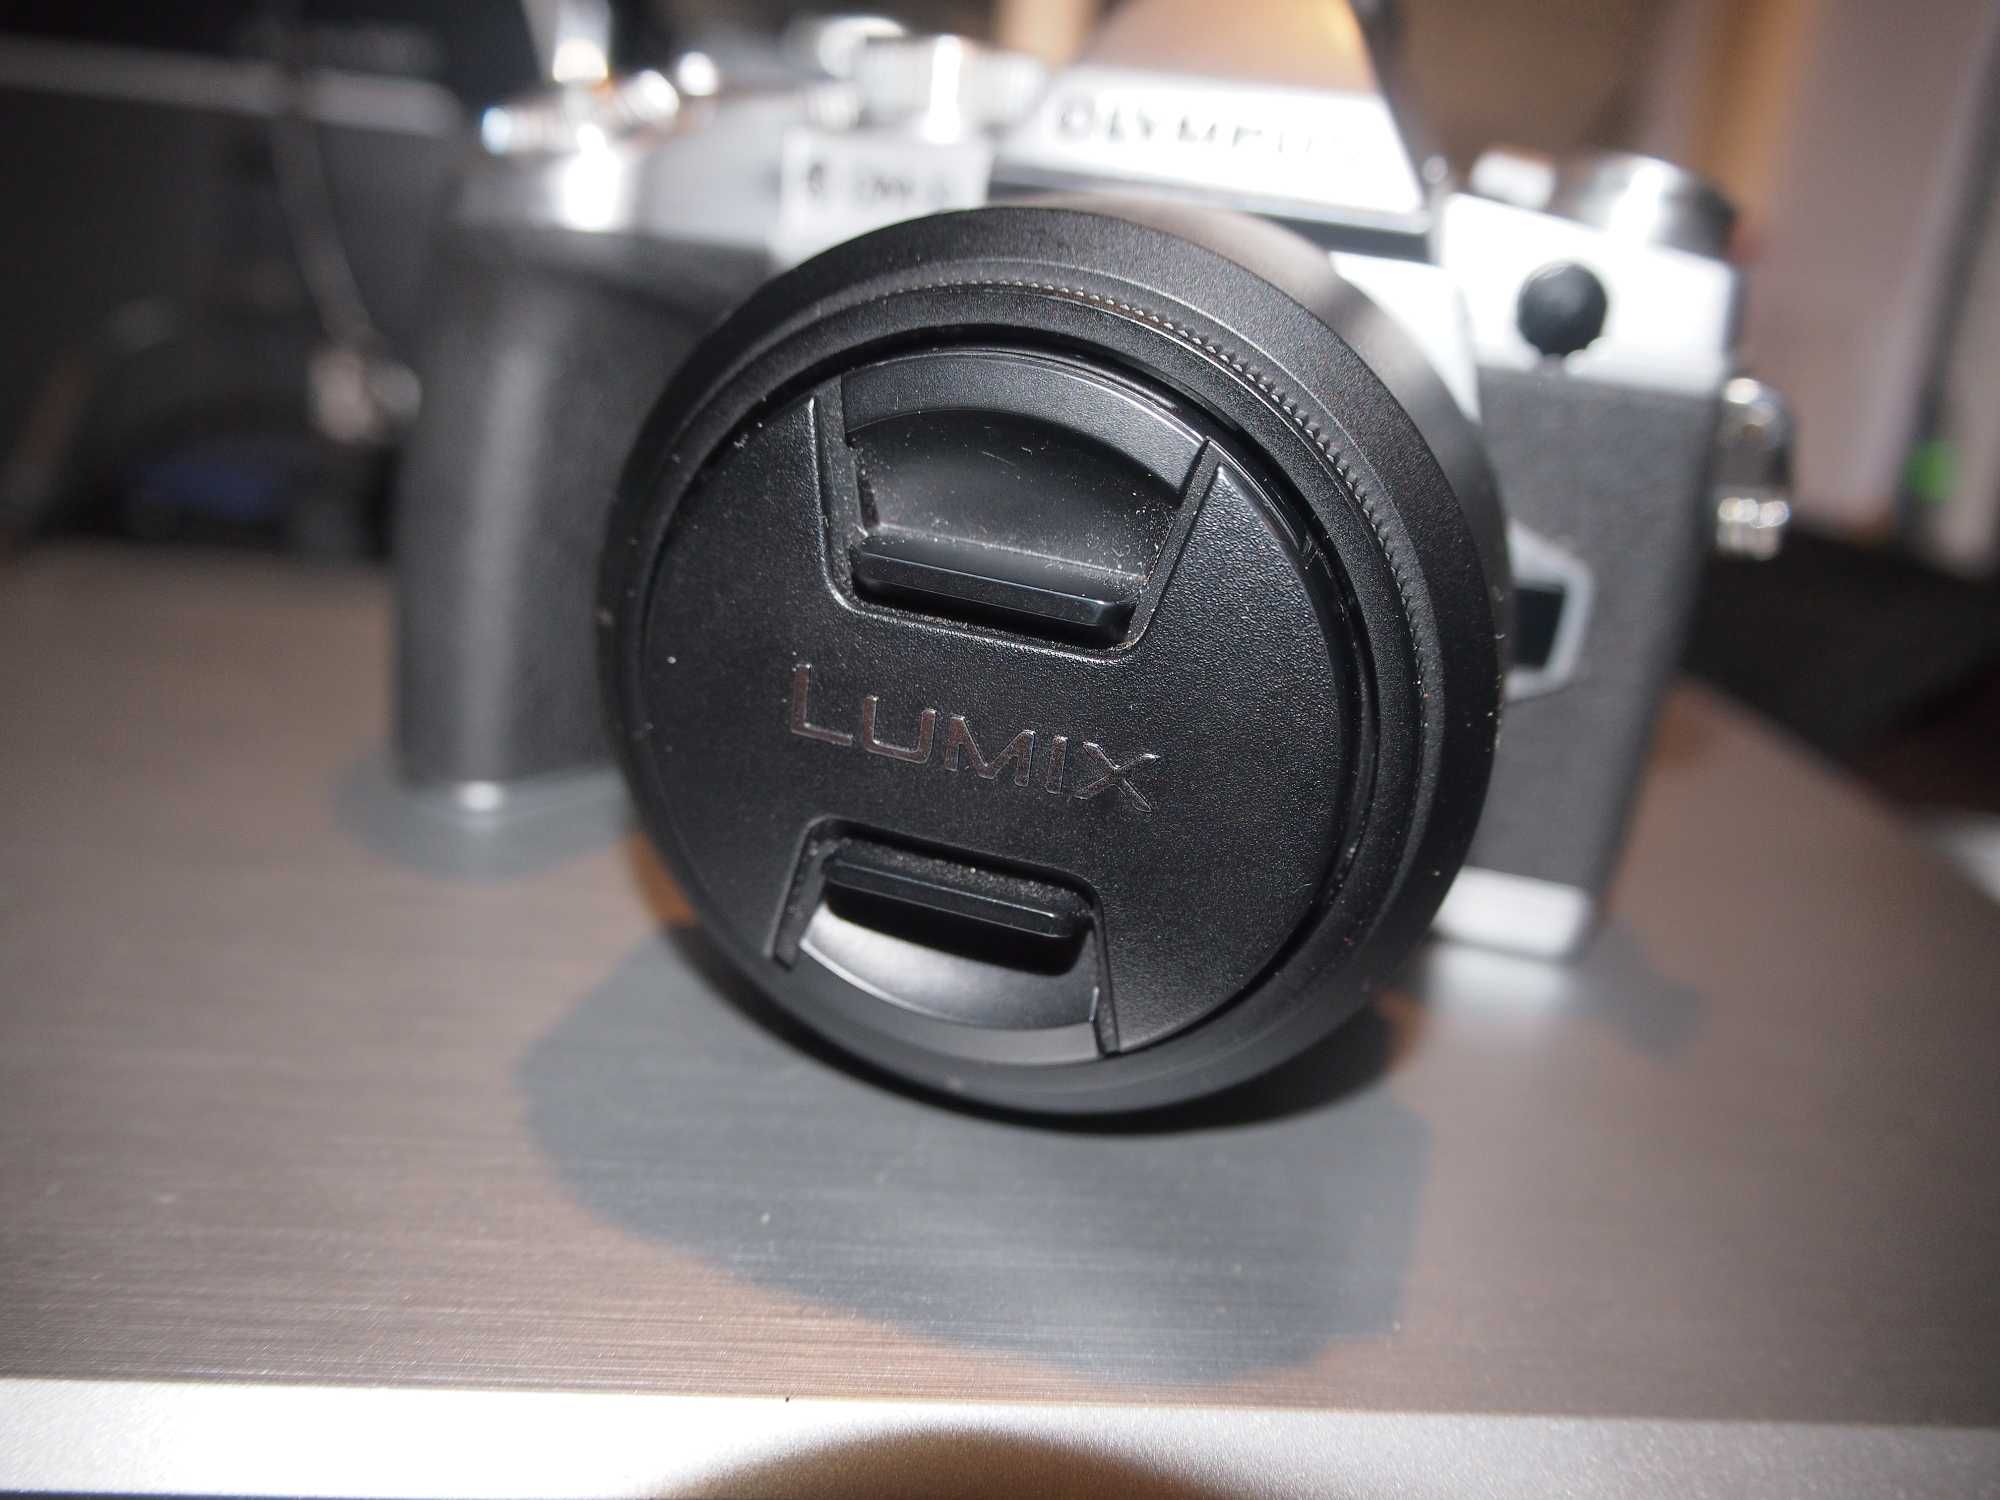 Obiectiv Panasonic Lumix 25 mm F1.7